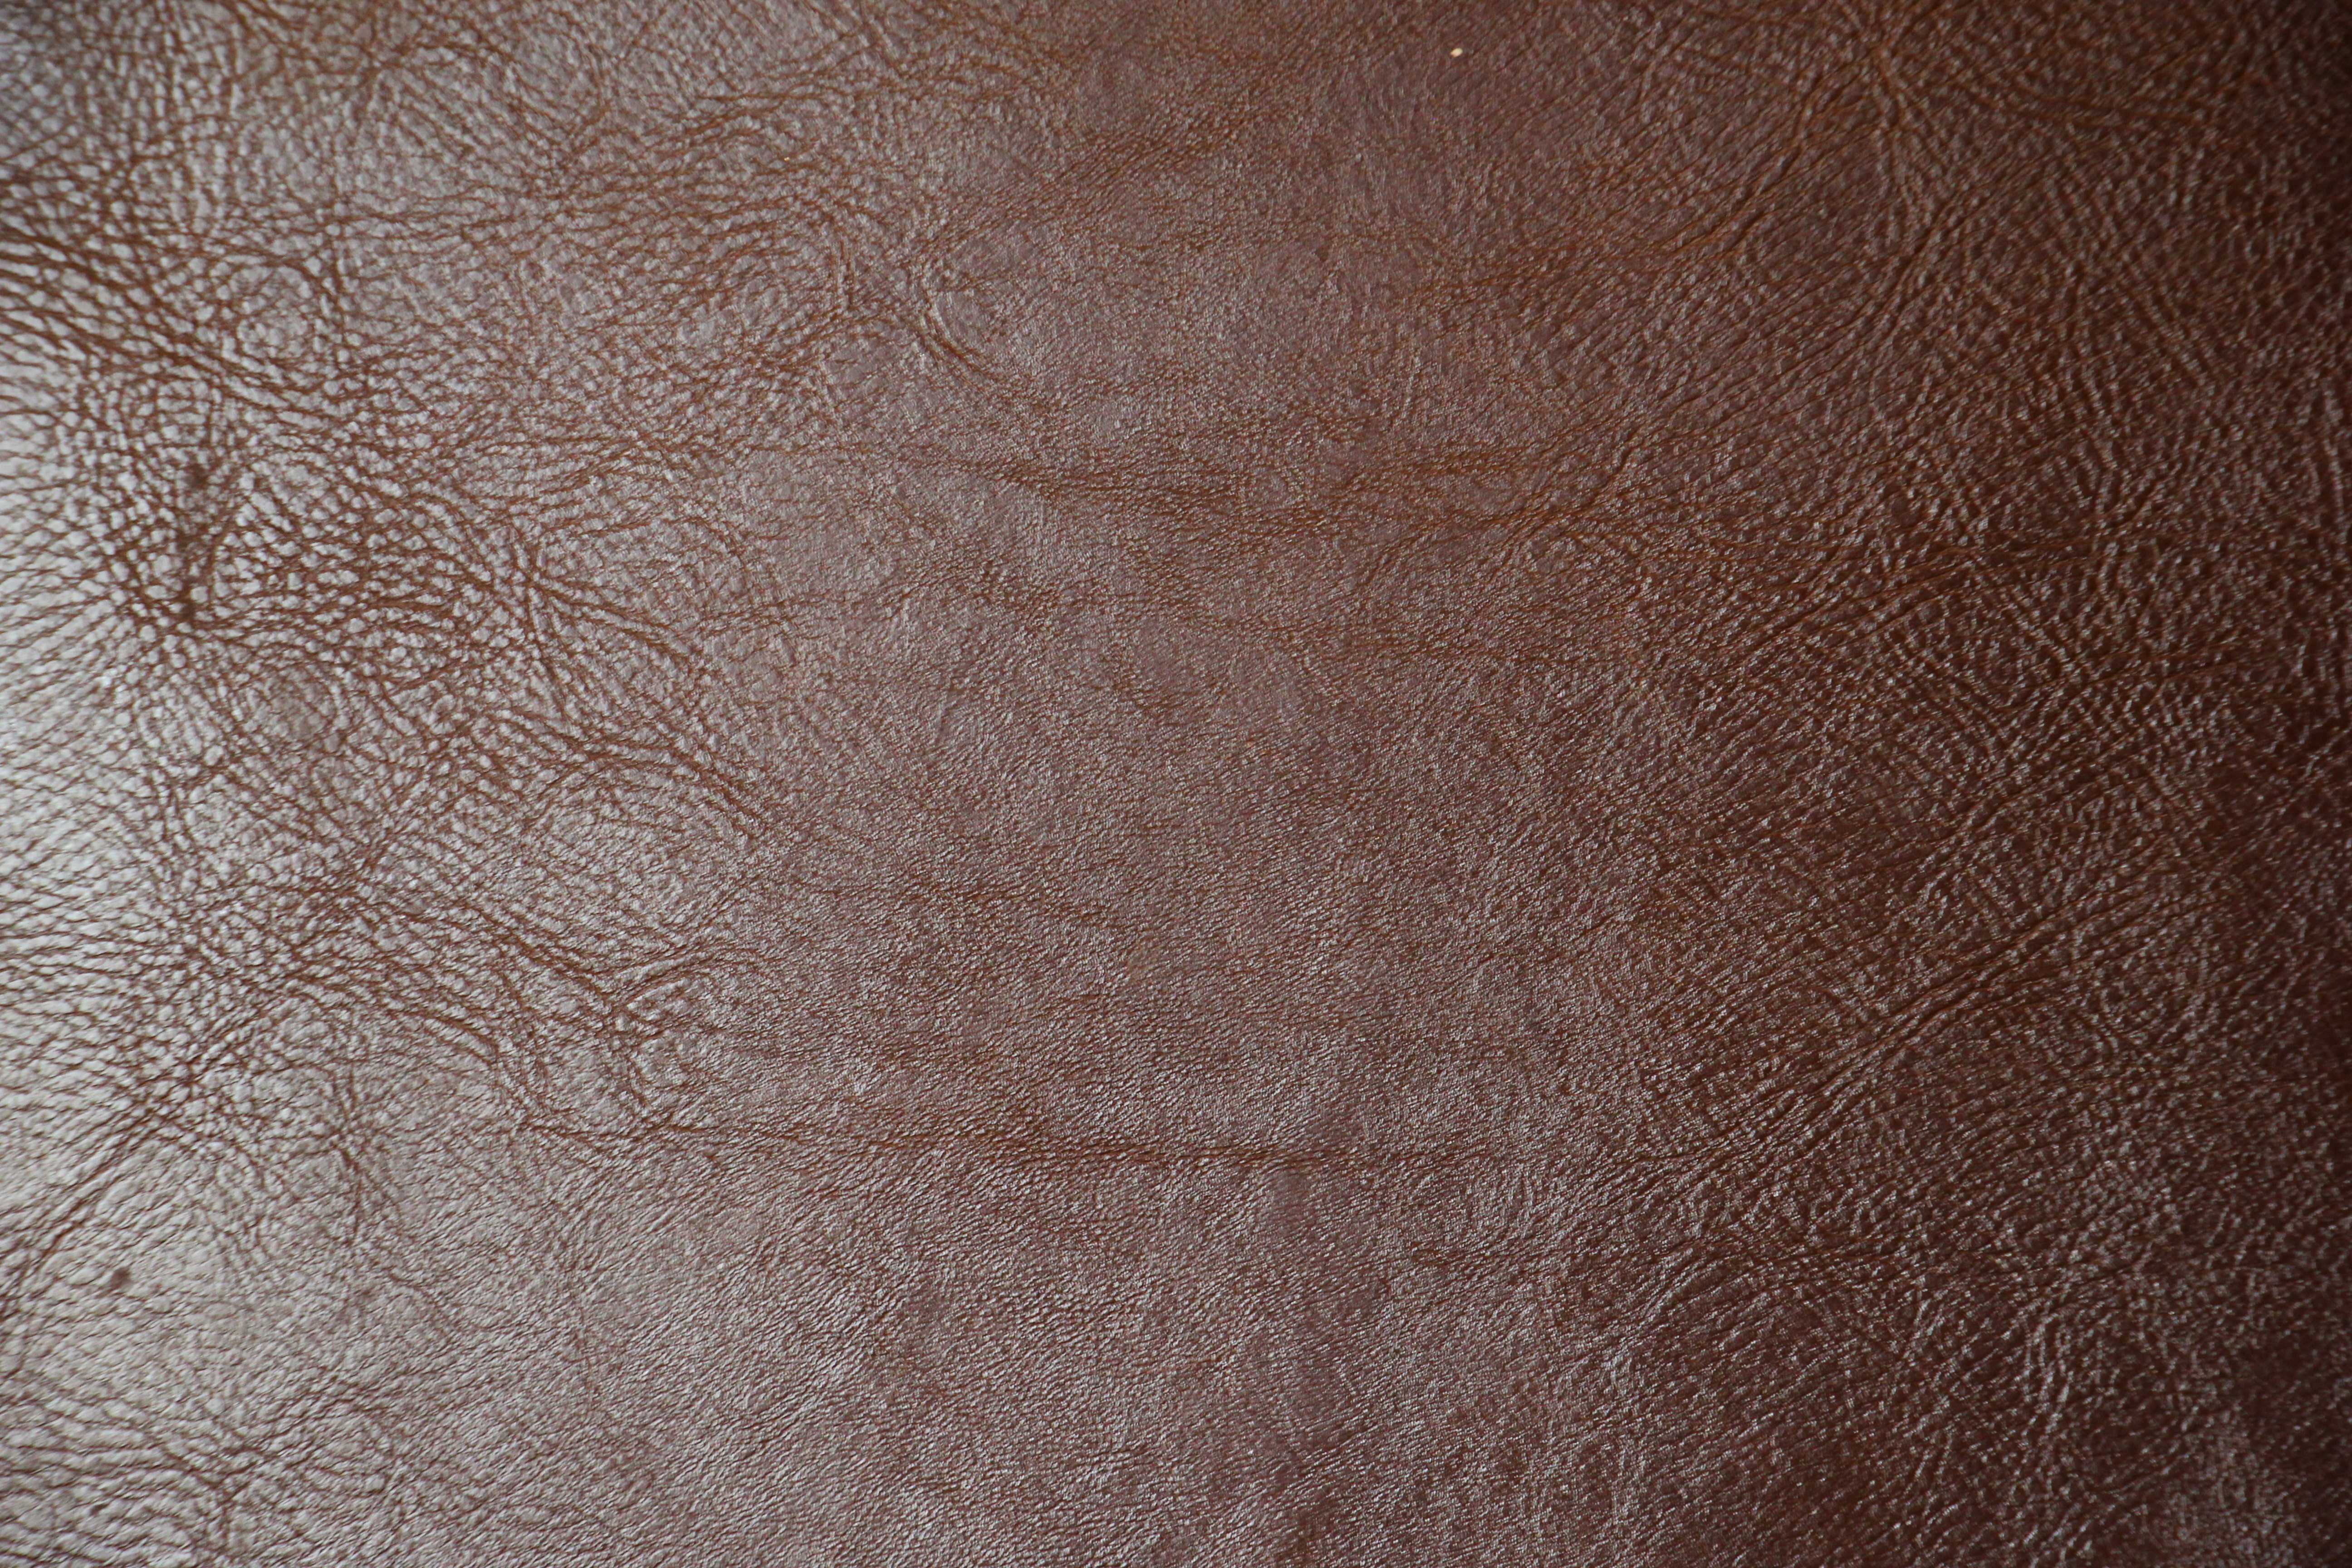 Jacket Fabric Texture